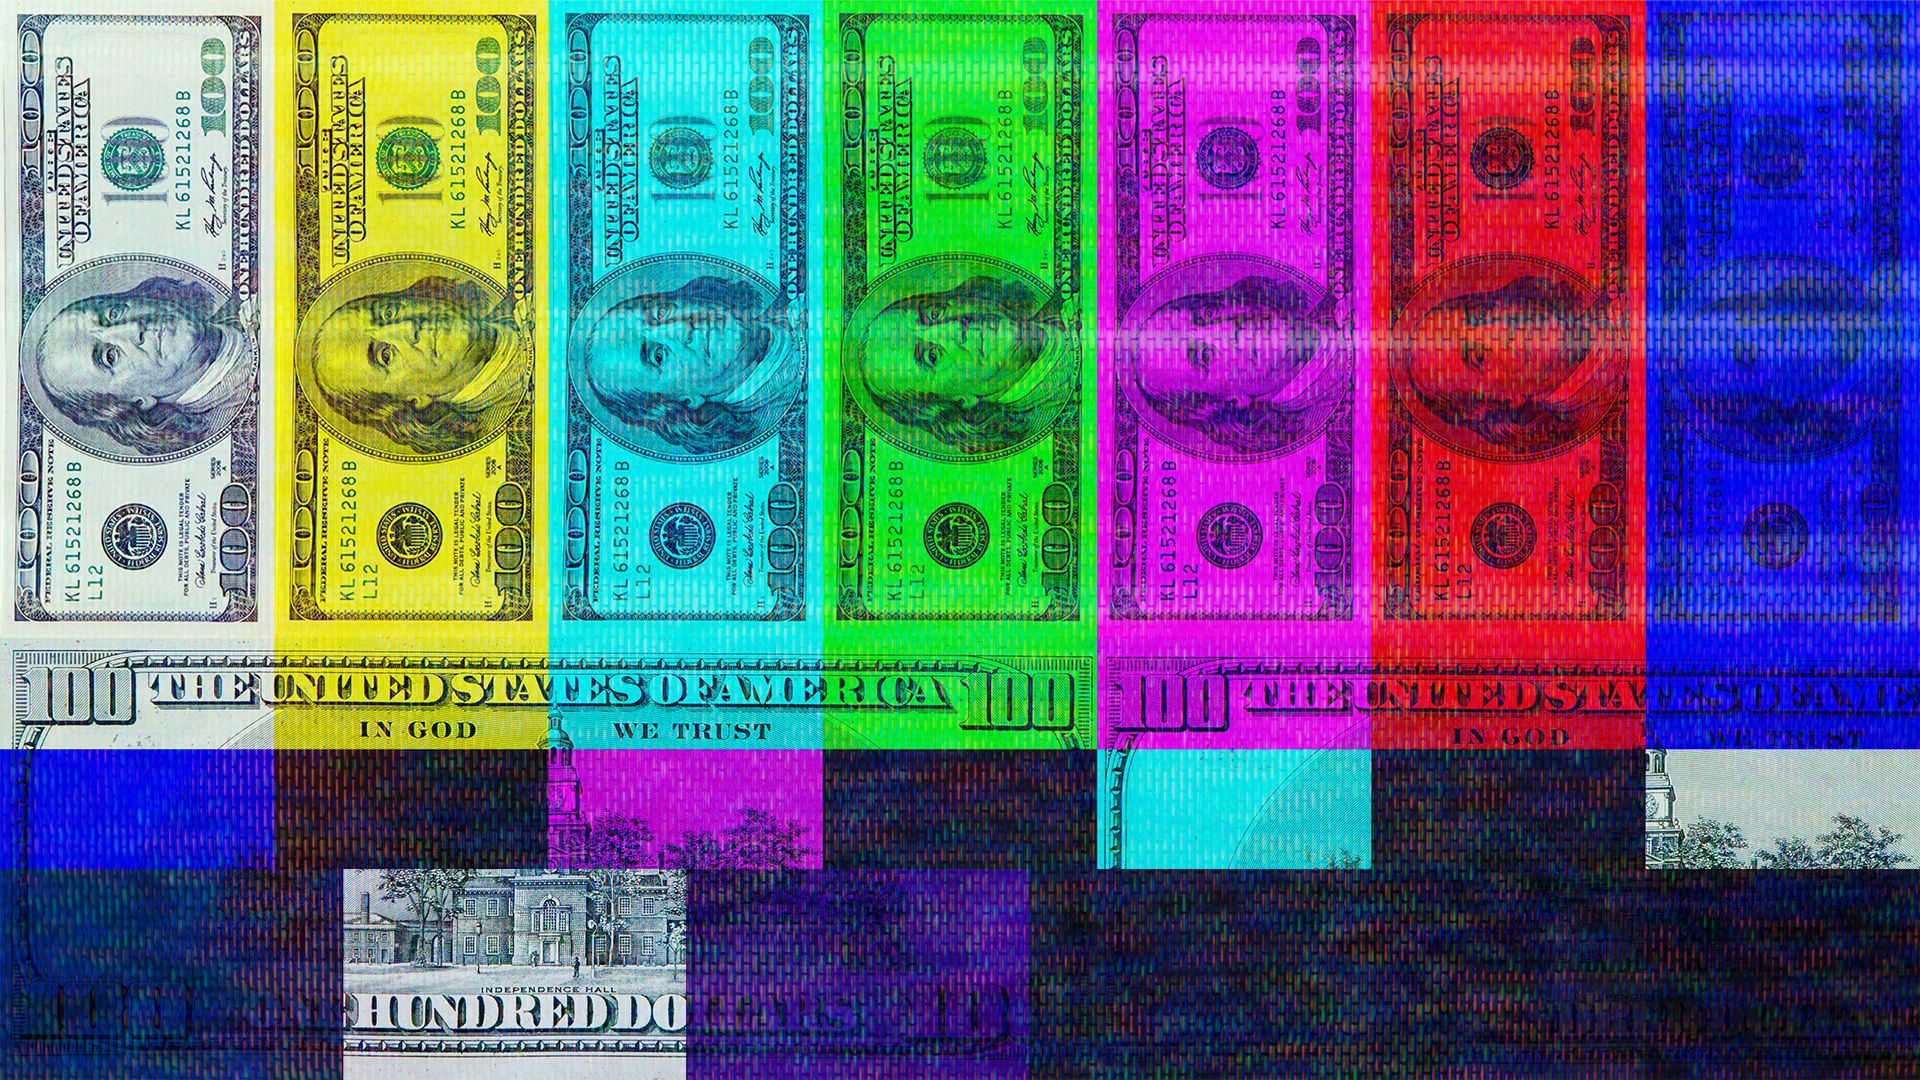 Illustration of a television test pattern made of hundred dollar bills.